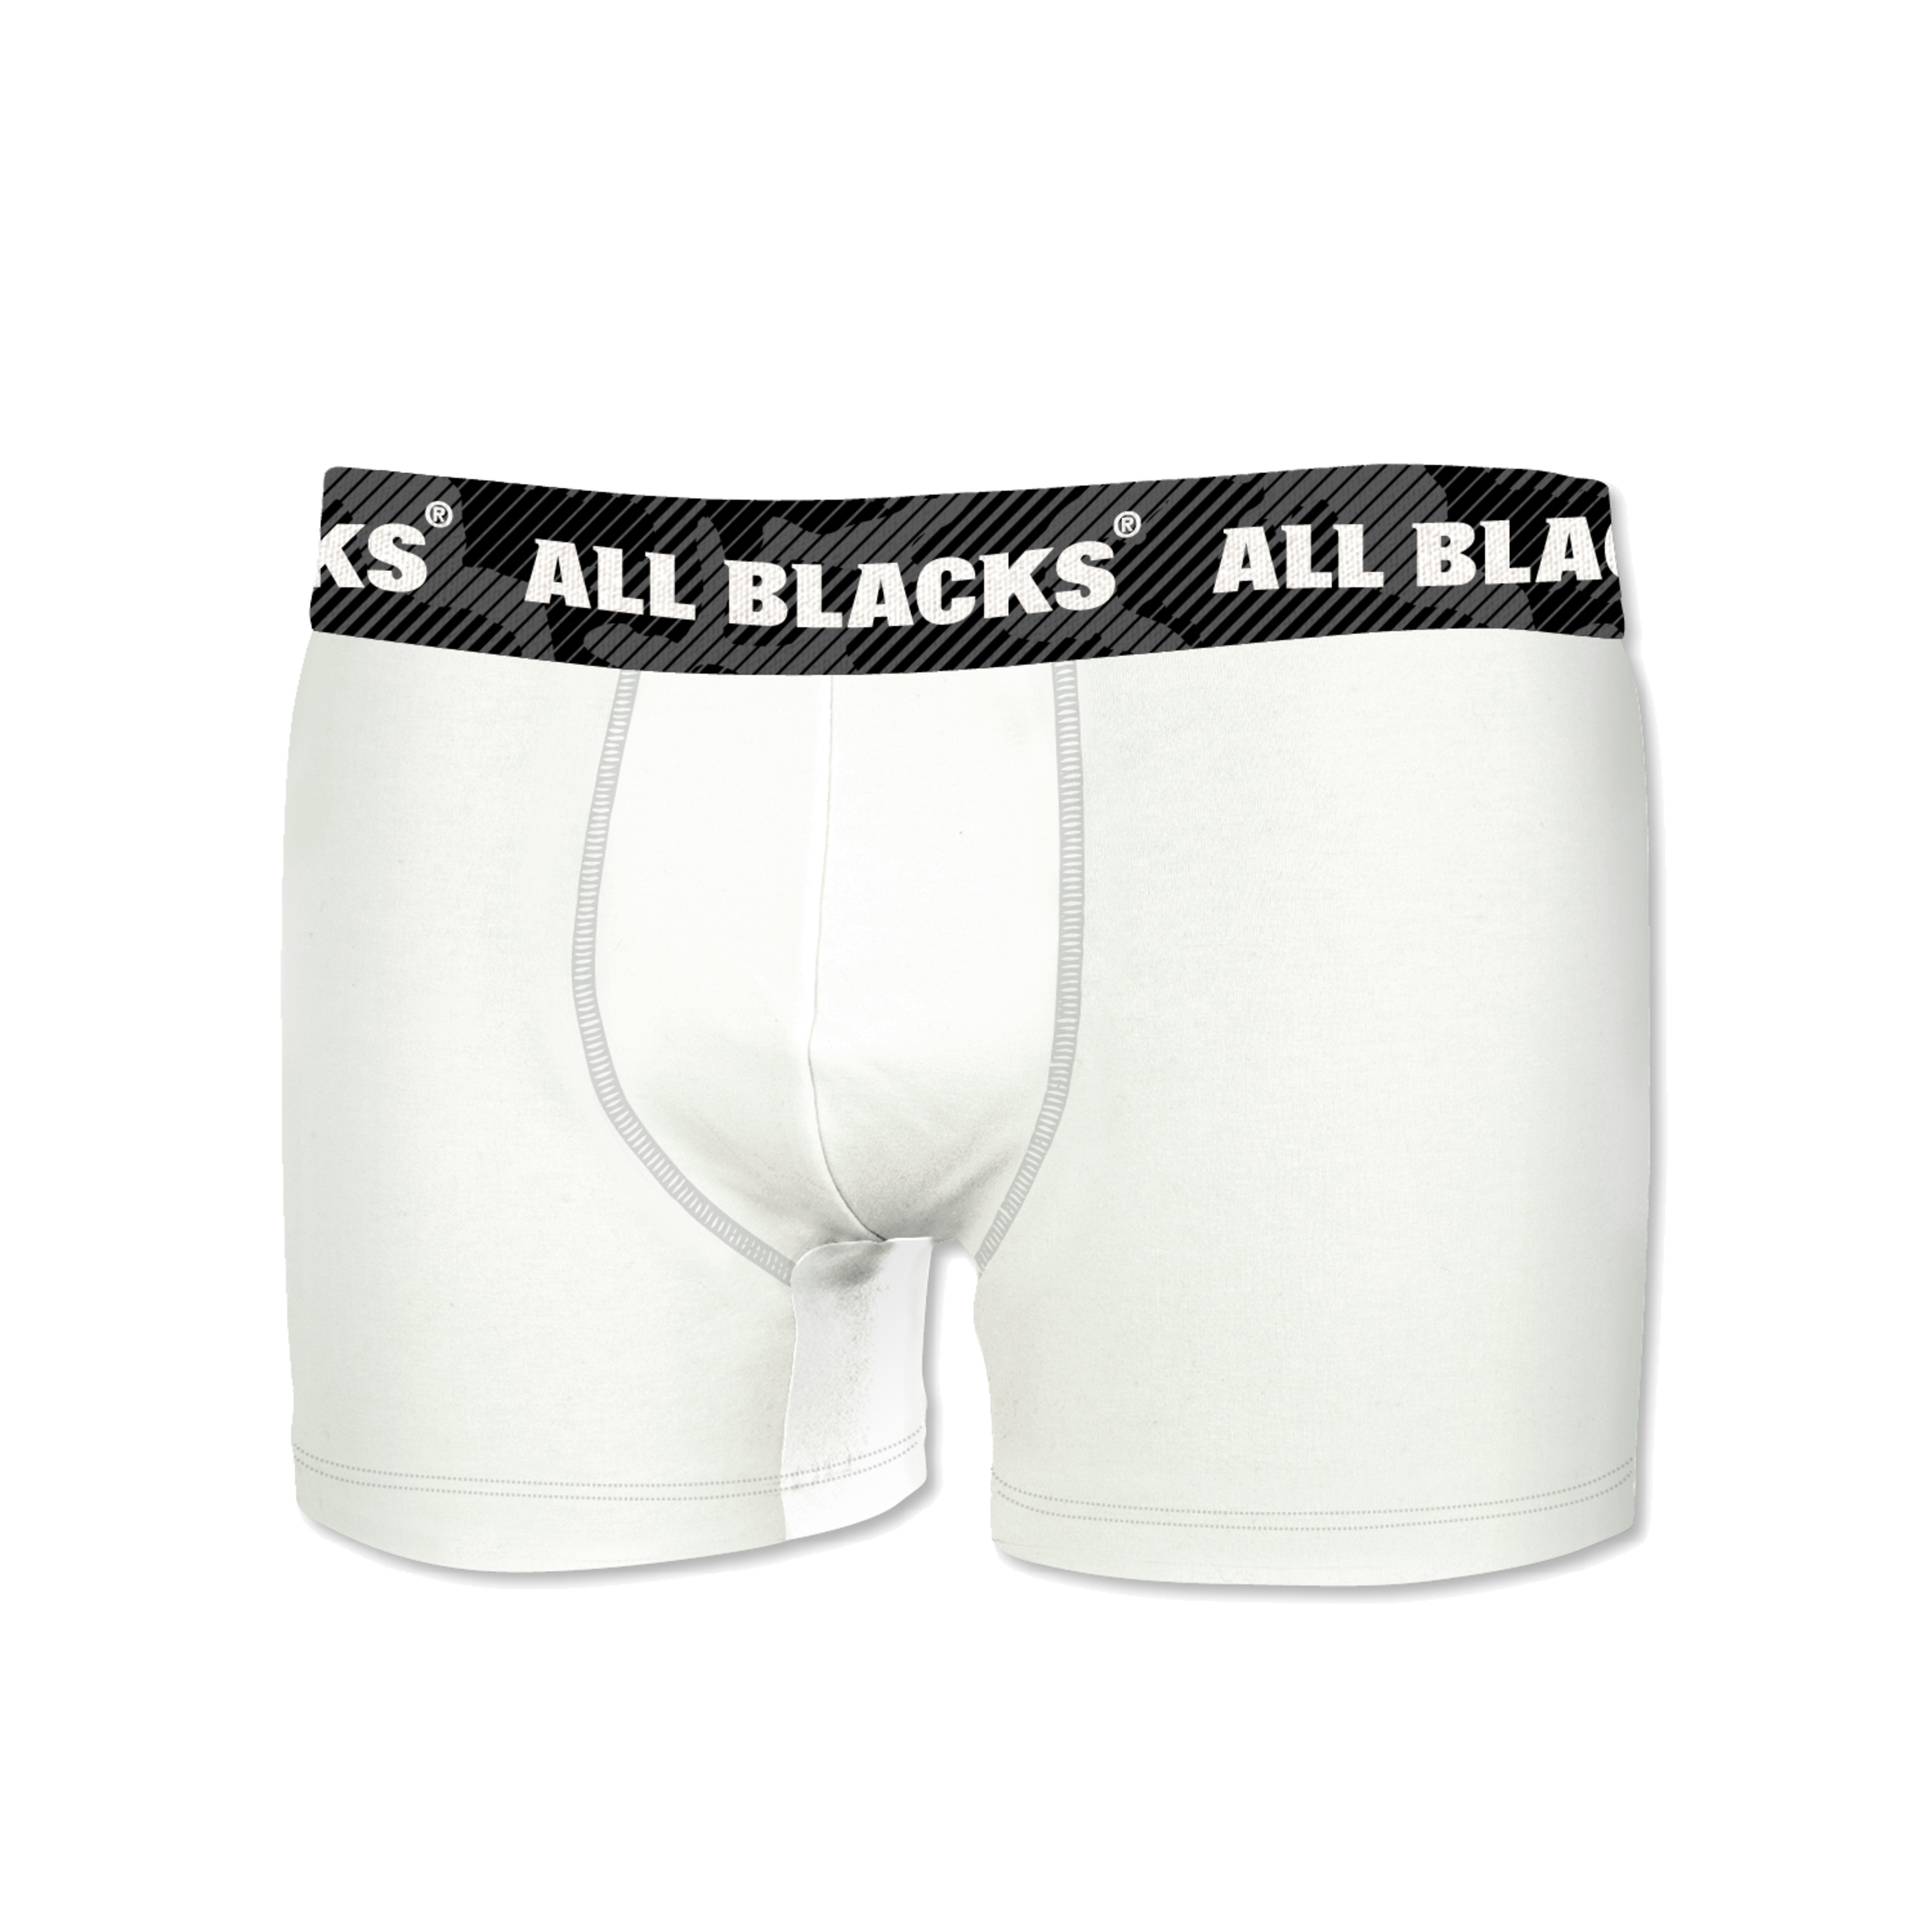 Calzoncillos All Blacks - blanco - 